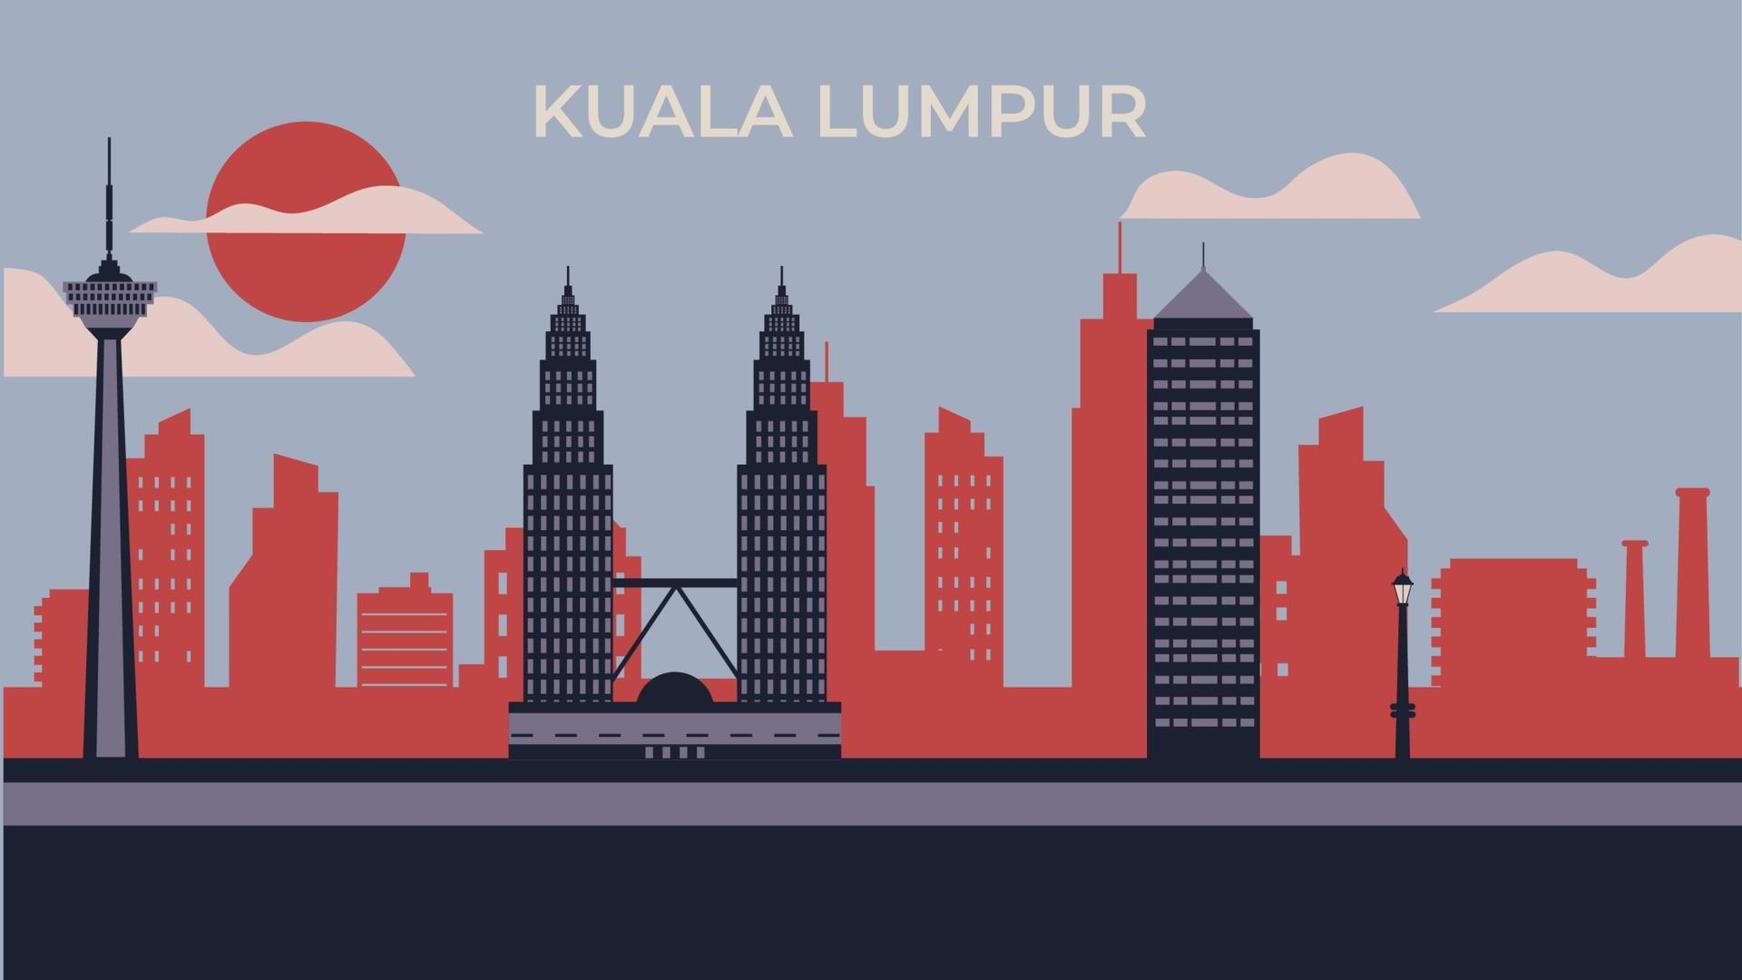 Kuala lumpur flat illustration for card vector